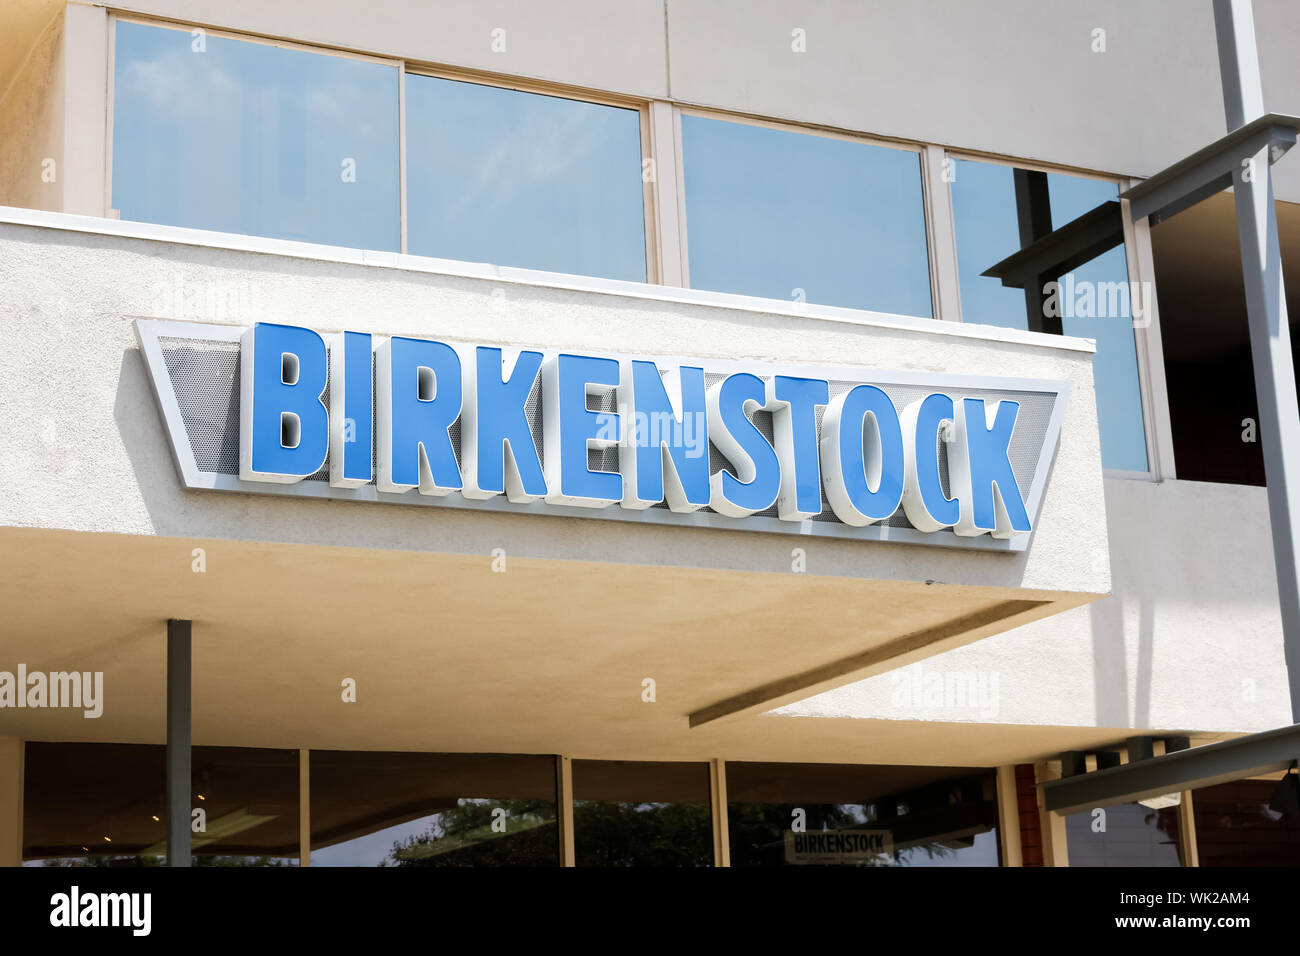 birkenstock the shoe company